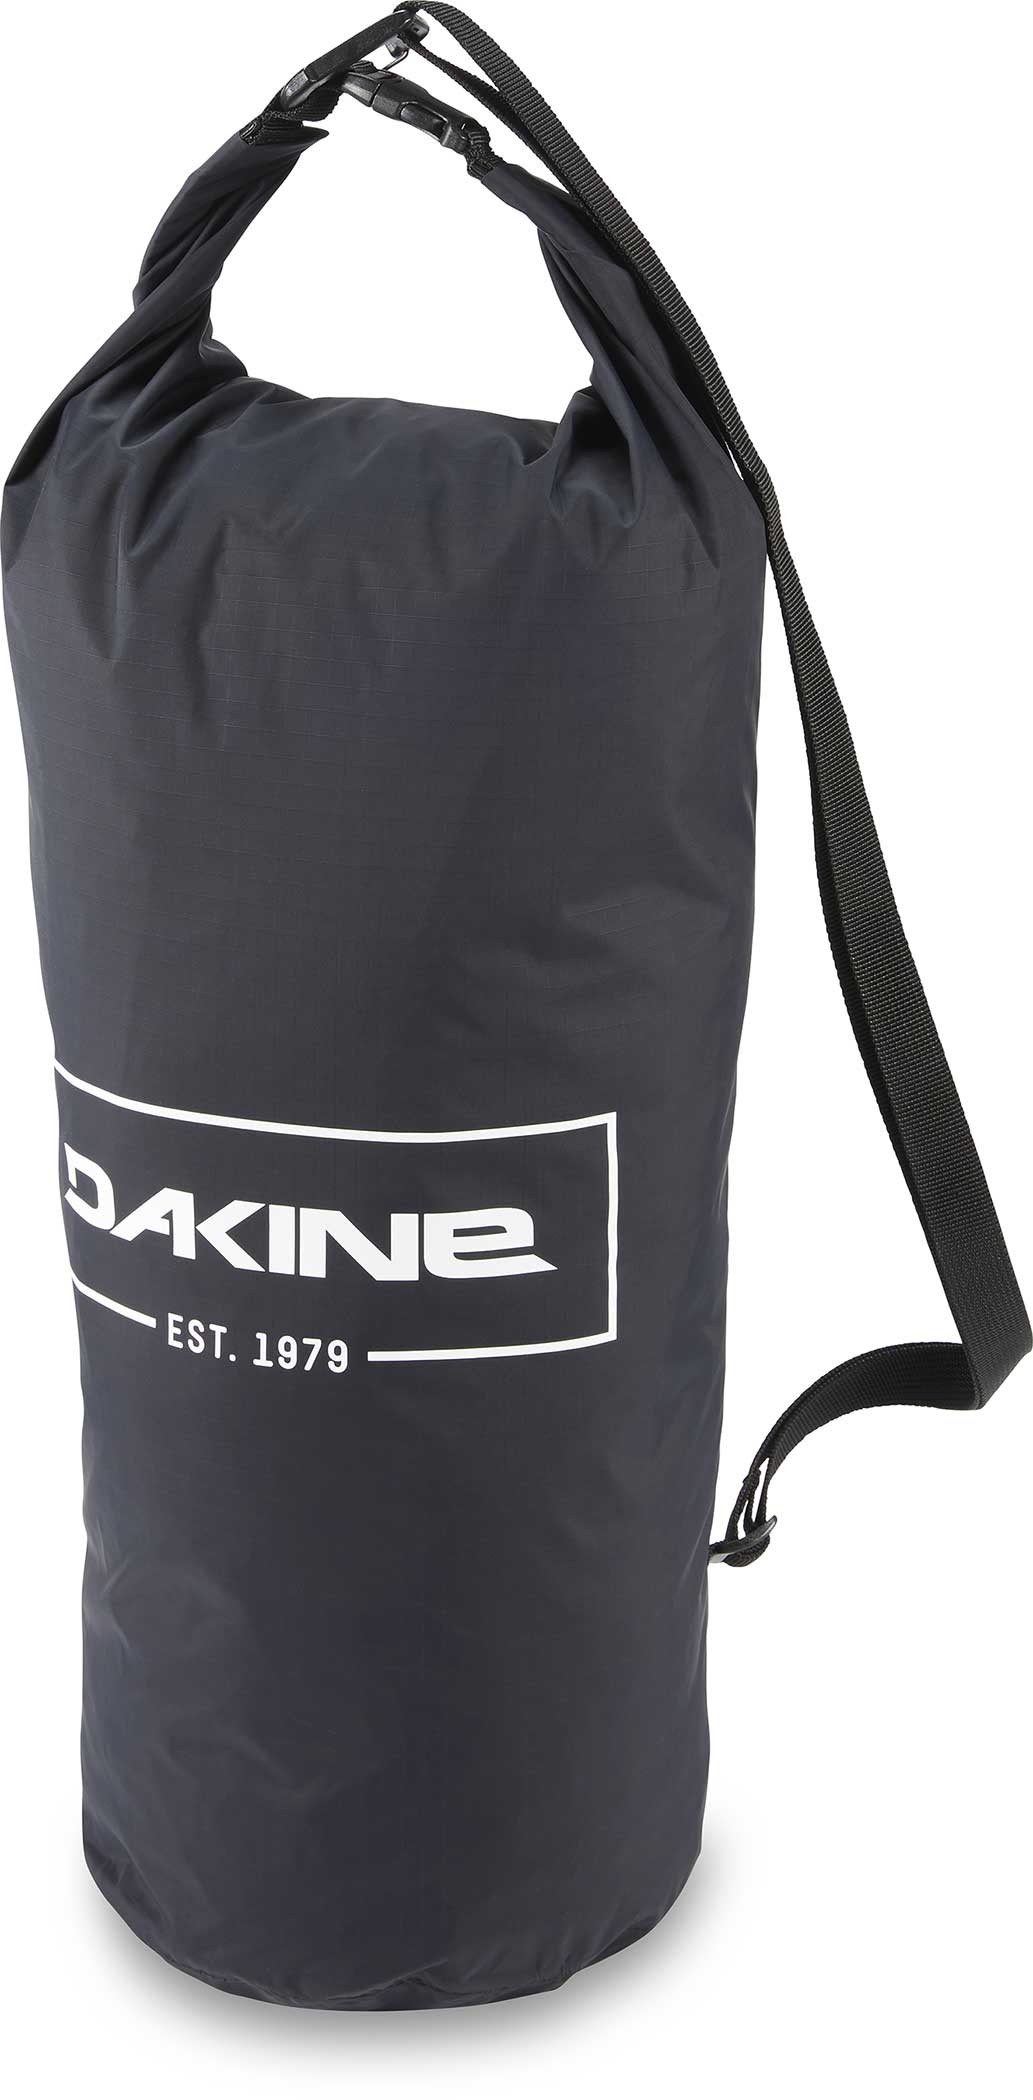 Tasche Dakine packable rolltop dry bag 20l.